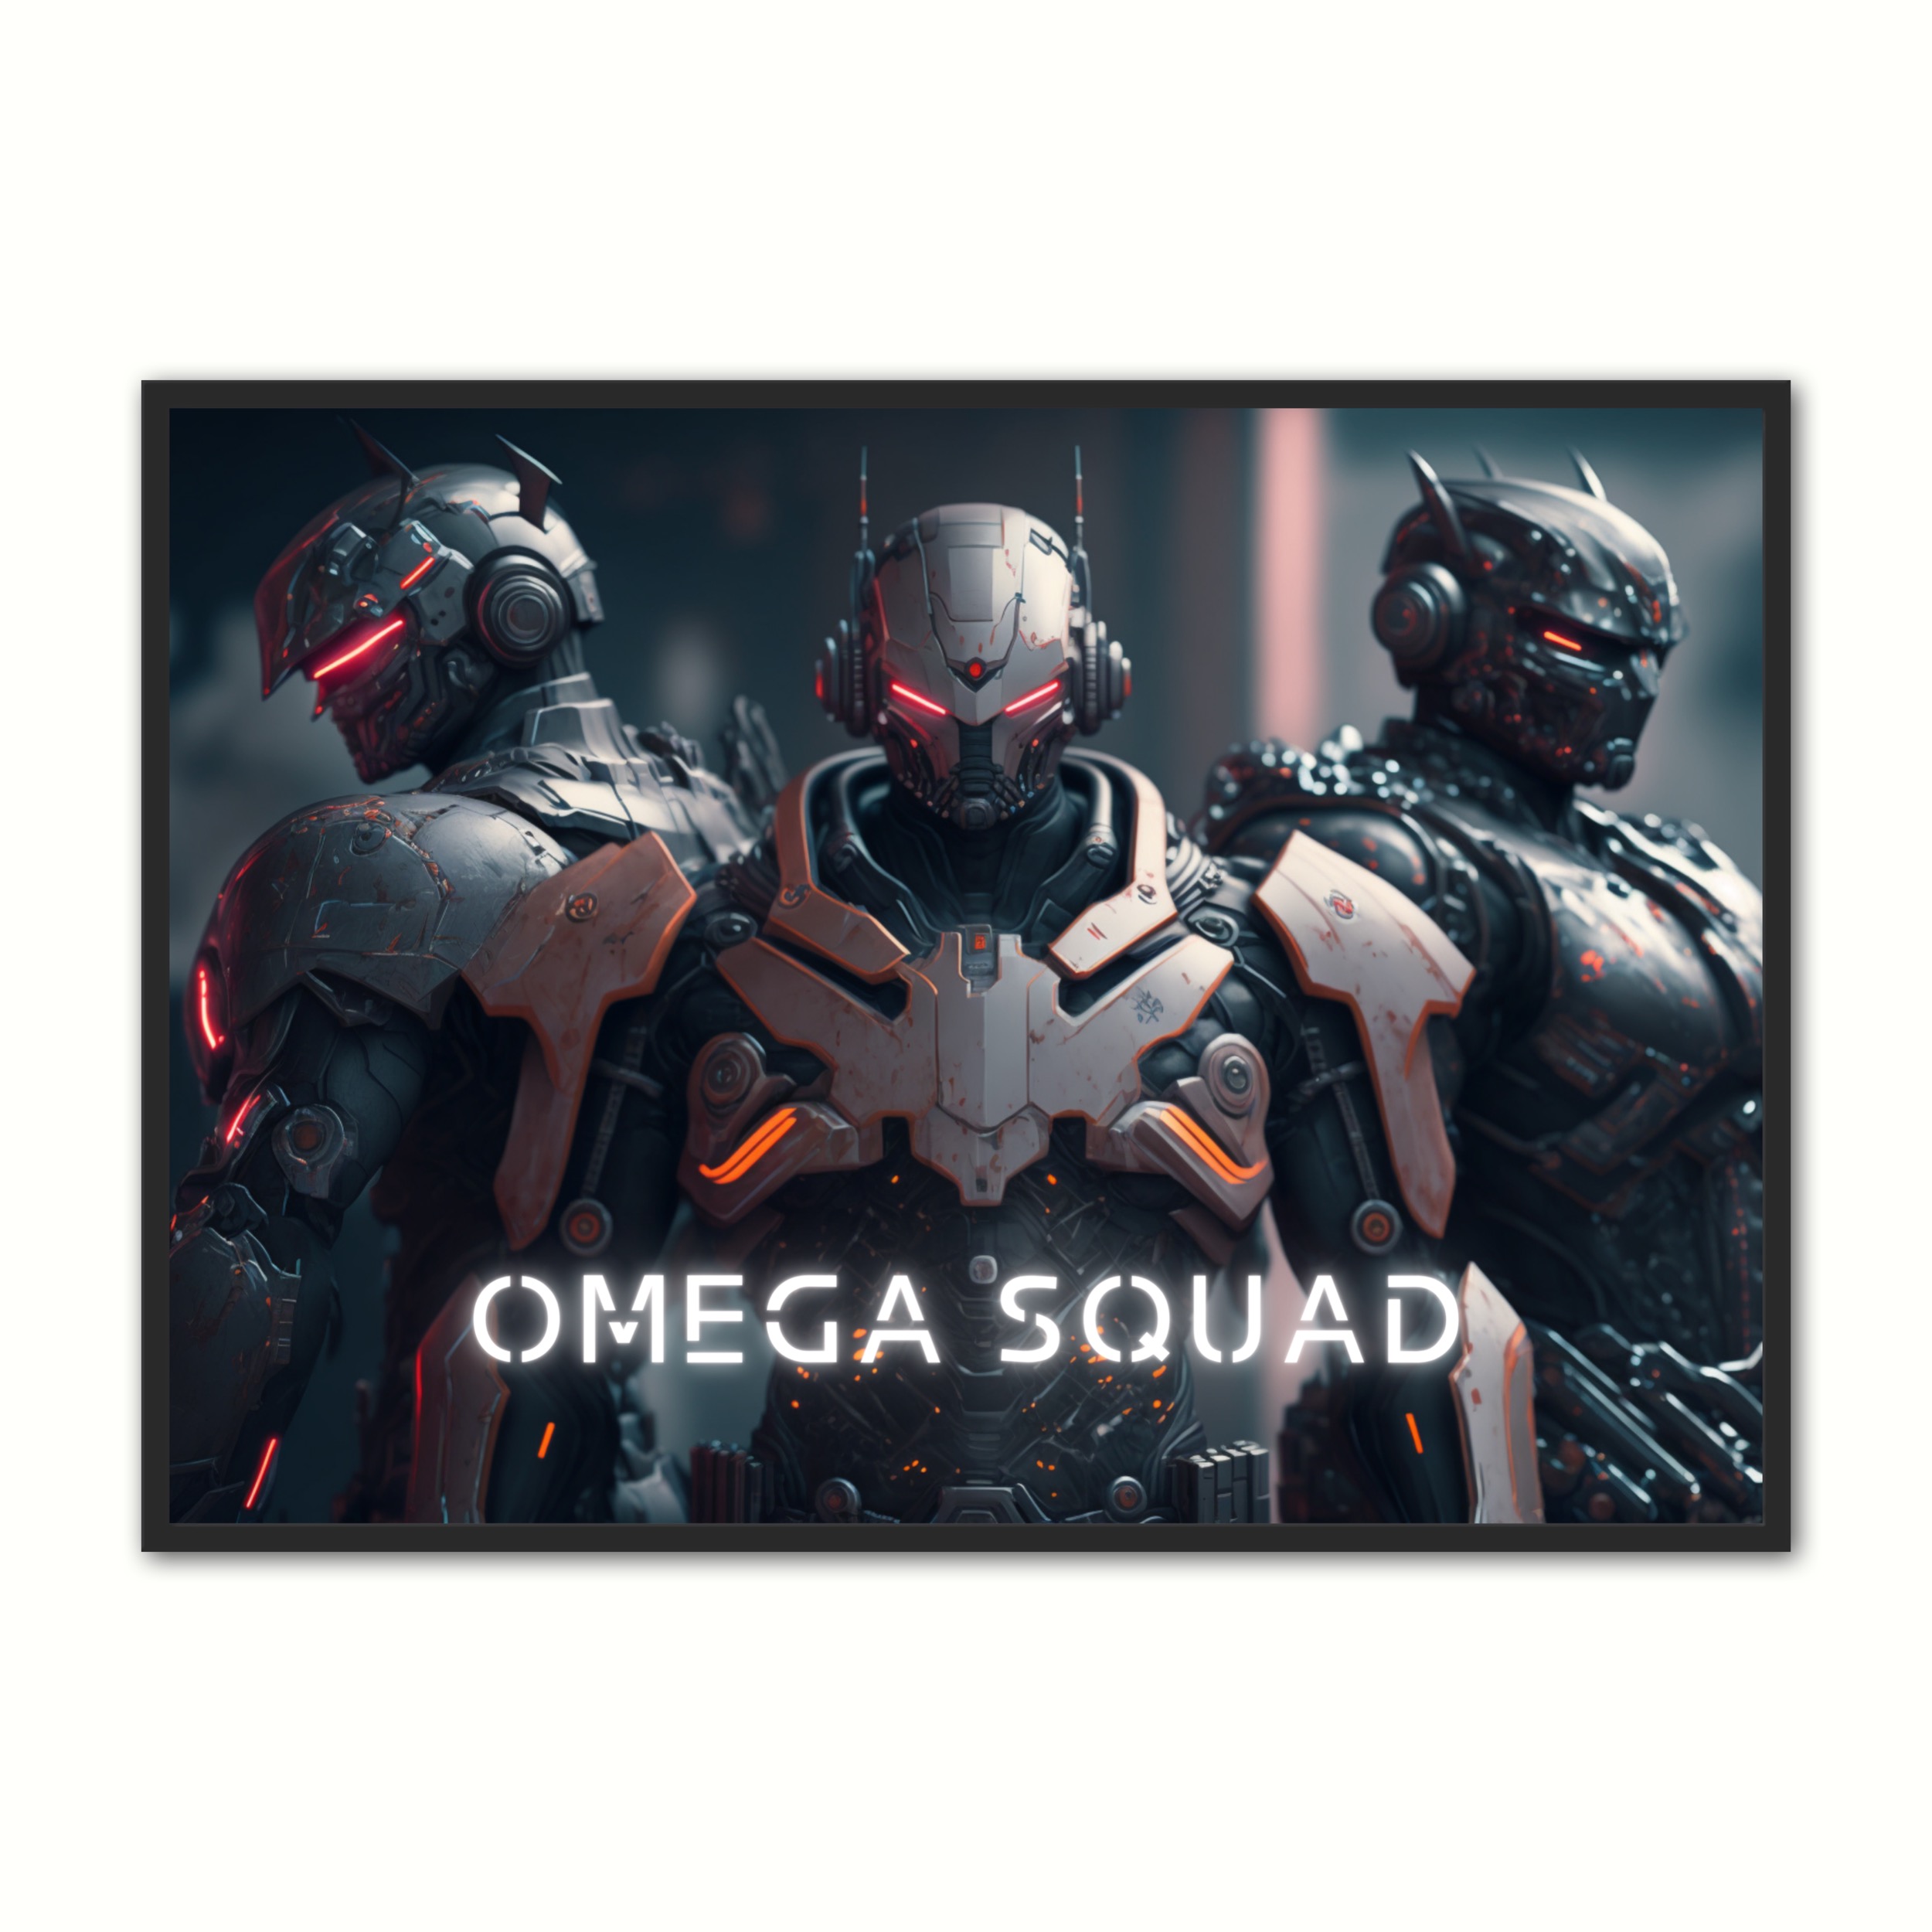 Se Plakat med Omega Squad - Android 21 x 29,7 cm (A4) hos Nyplakat.dk